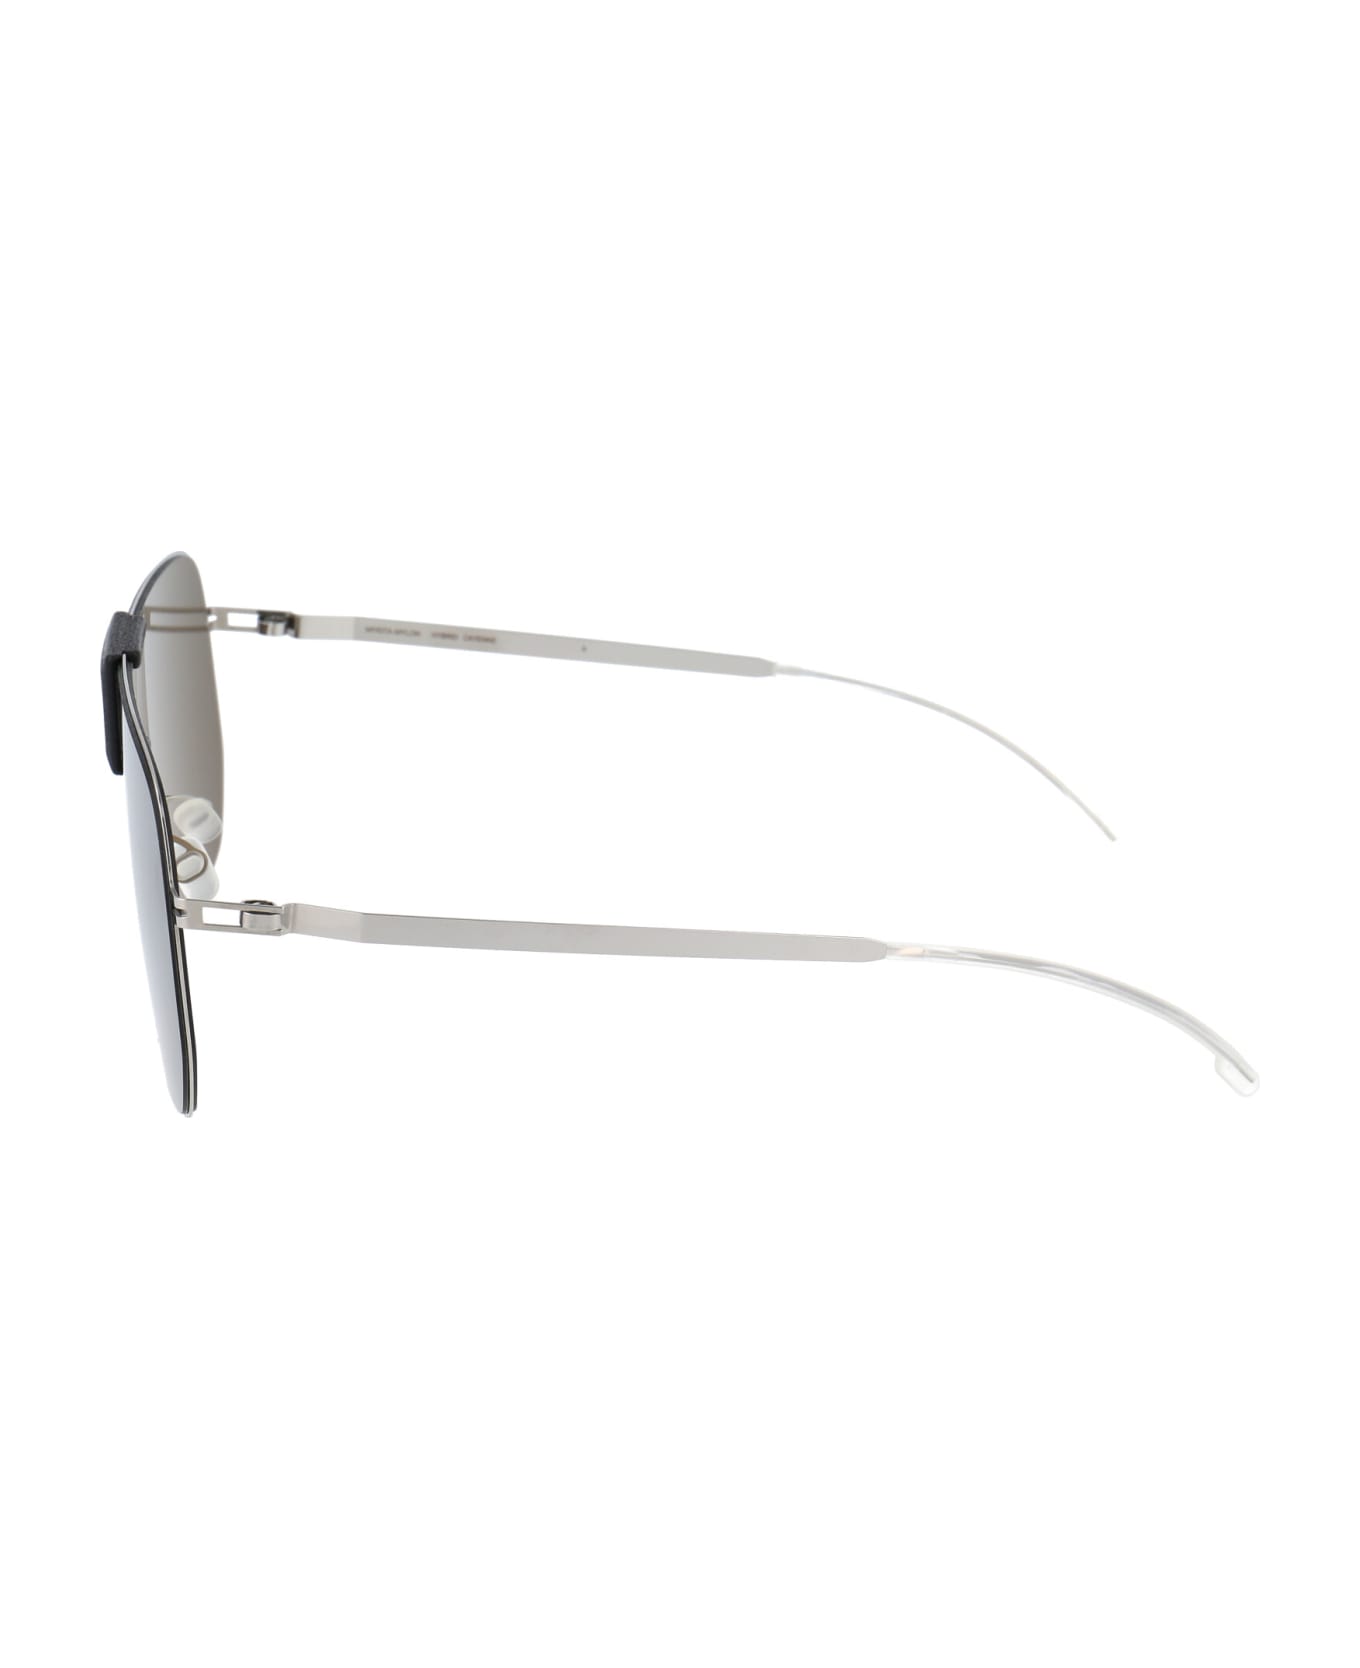 Mykita Cayenne Sunglasses - 351 MH22 Pitch Black/Shiny Silver Silver Flash Shield